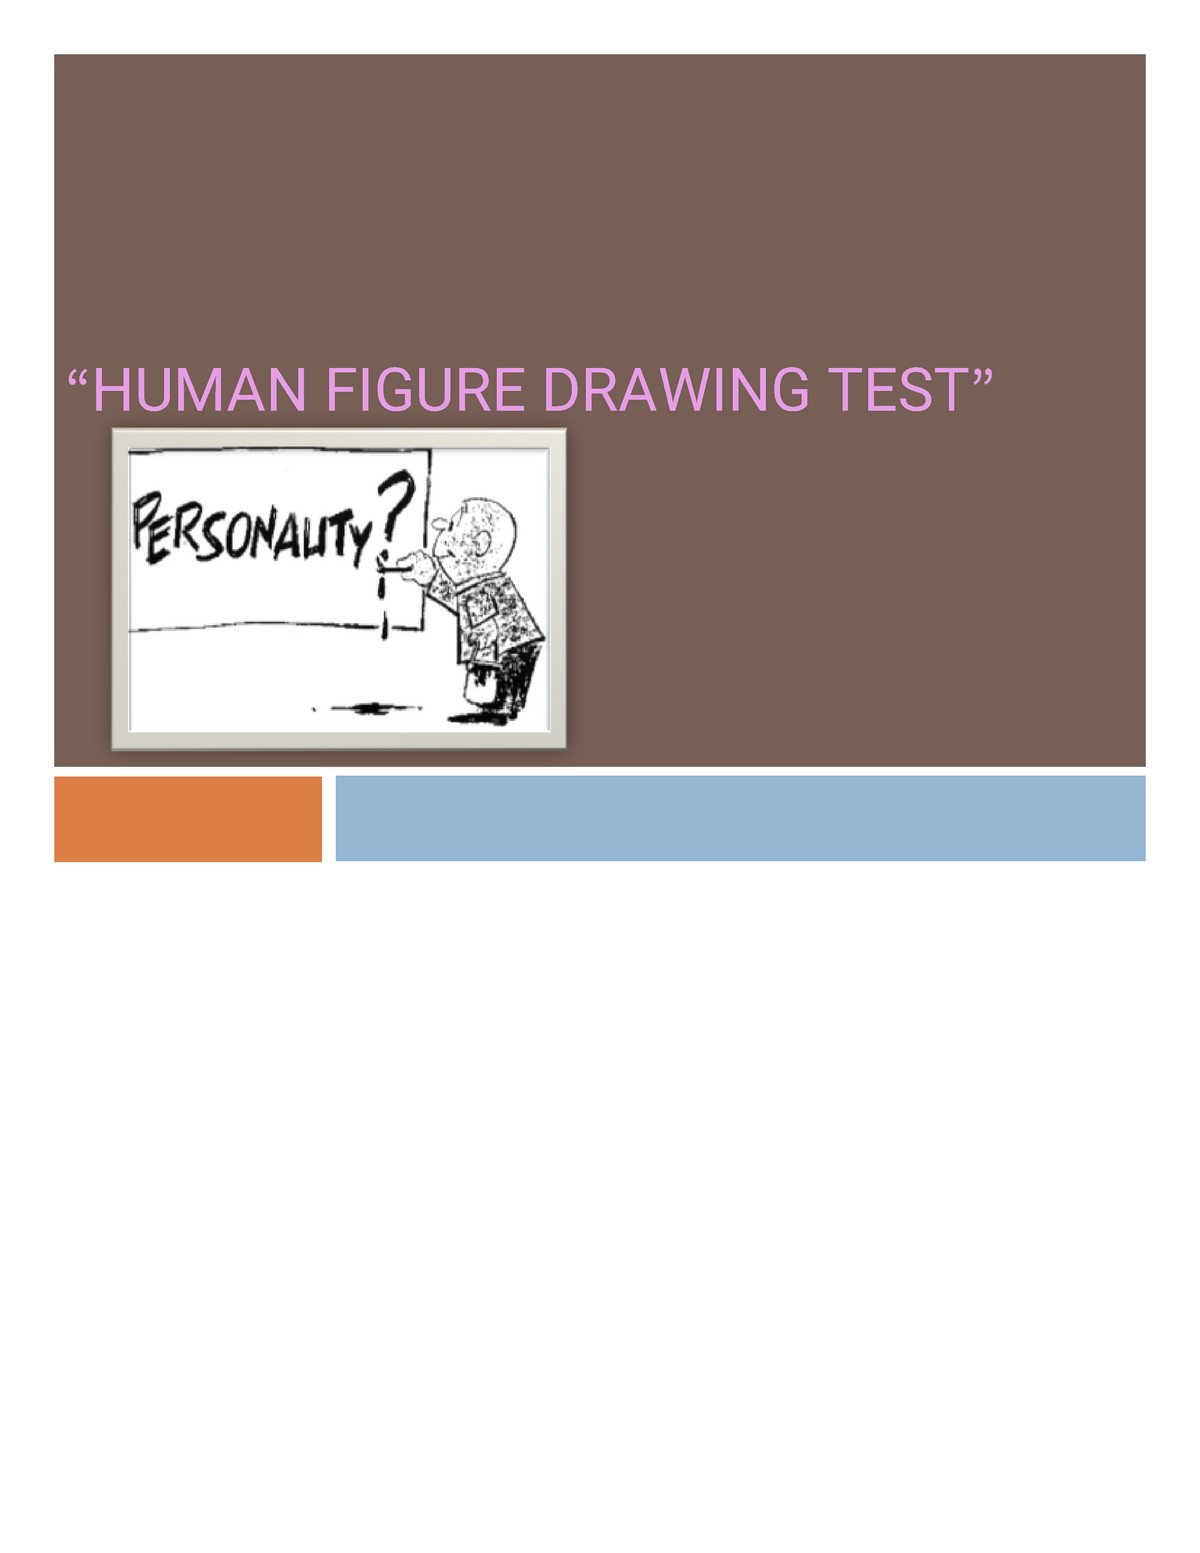 HFD Interpretation “HUMAN FIGURE DRAWING TEST” DEFINITION A